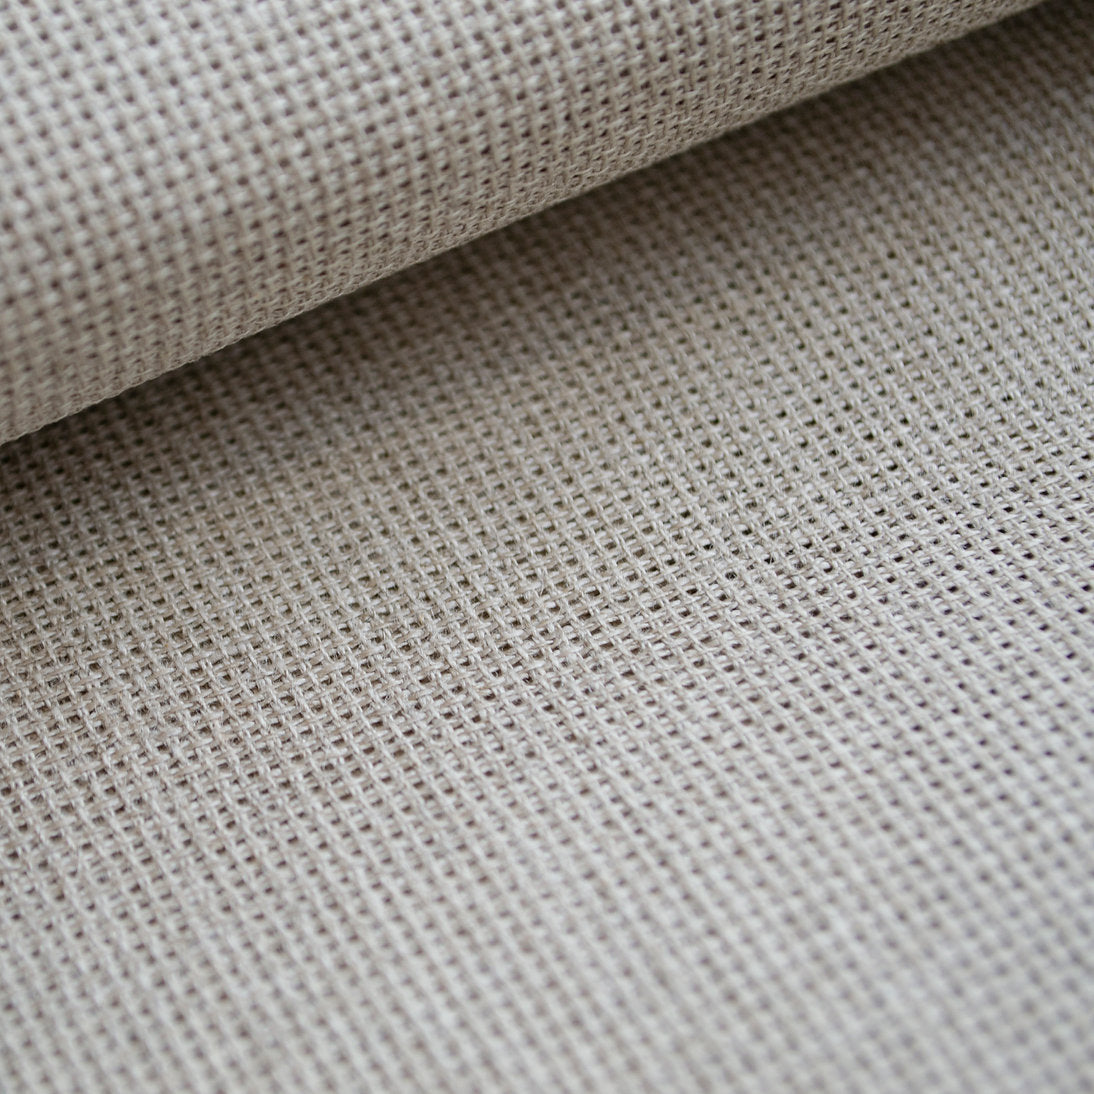 3419/53 Aida Linen Fabric 18 ct. Zweigart for cross stitch